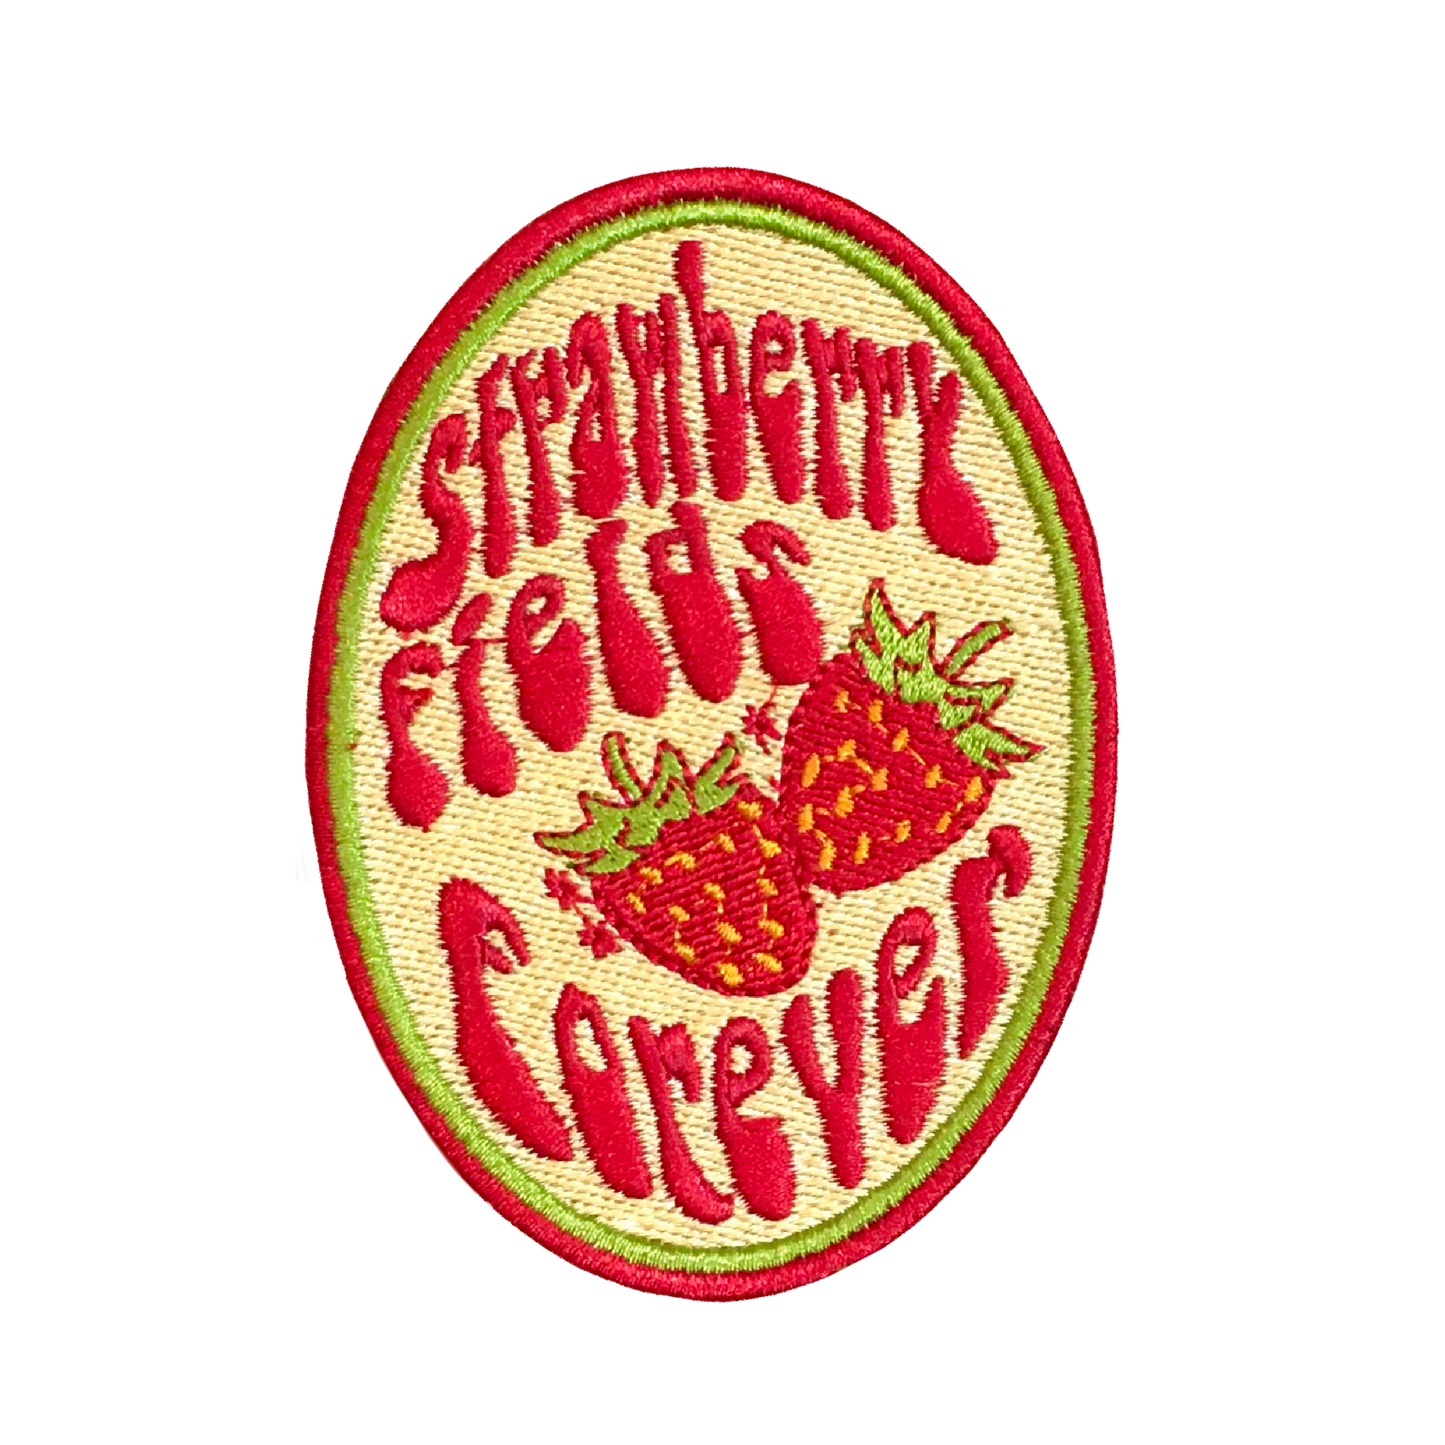 The Strawberry Fields Patch